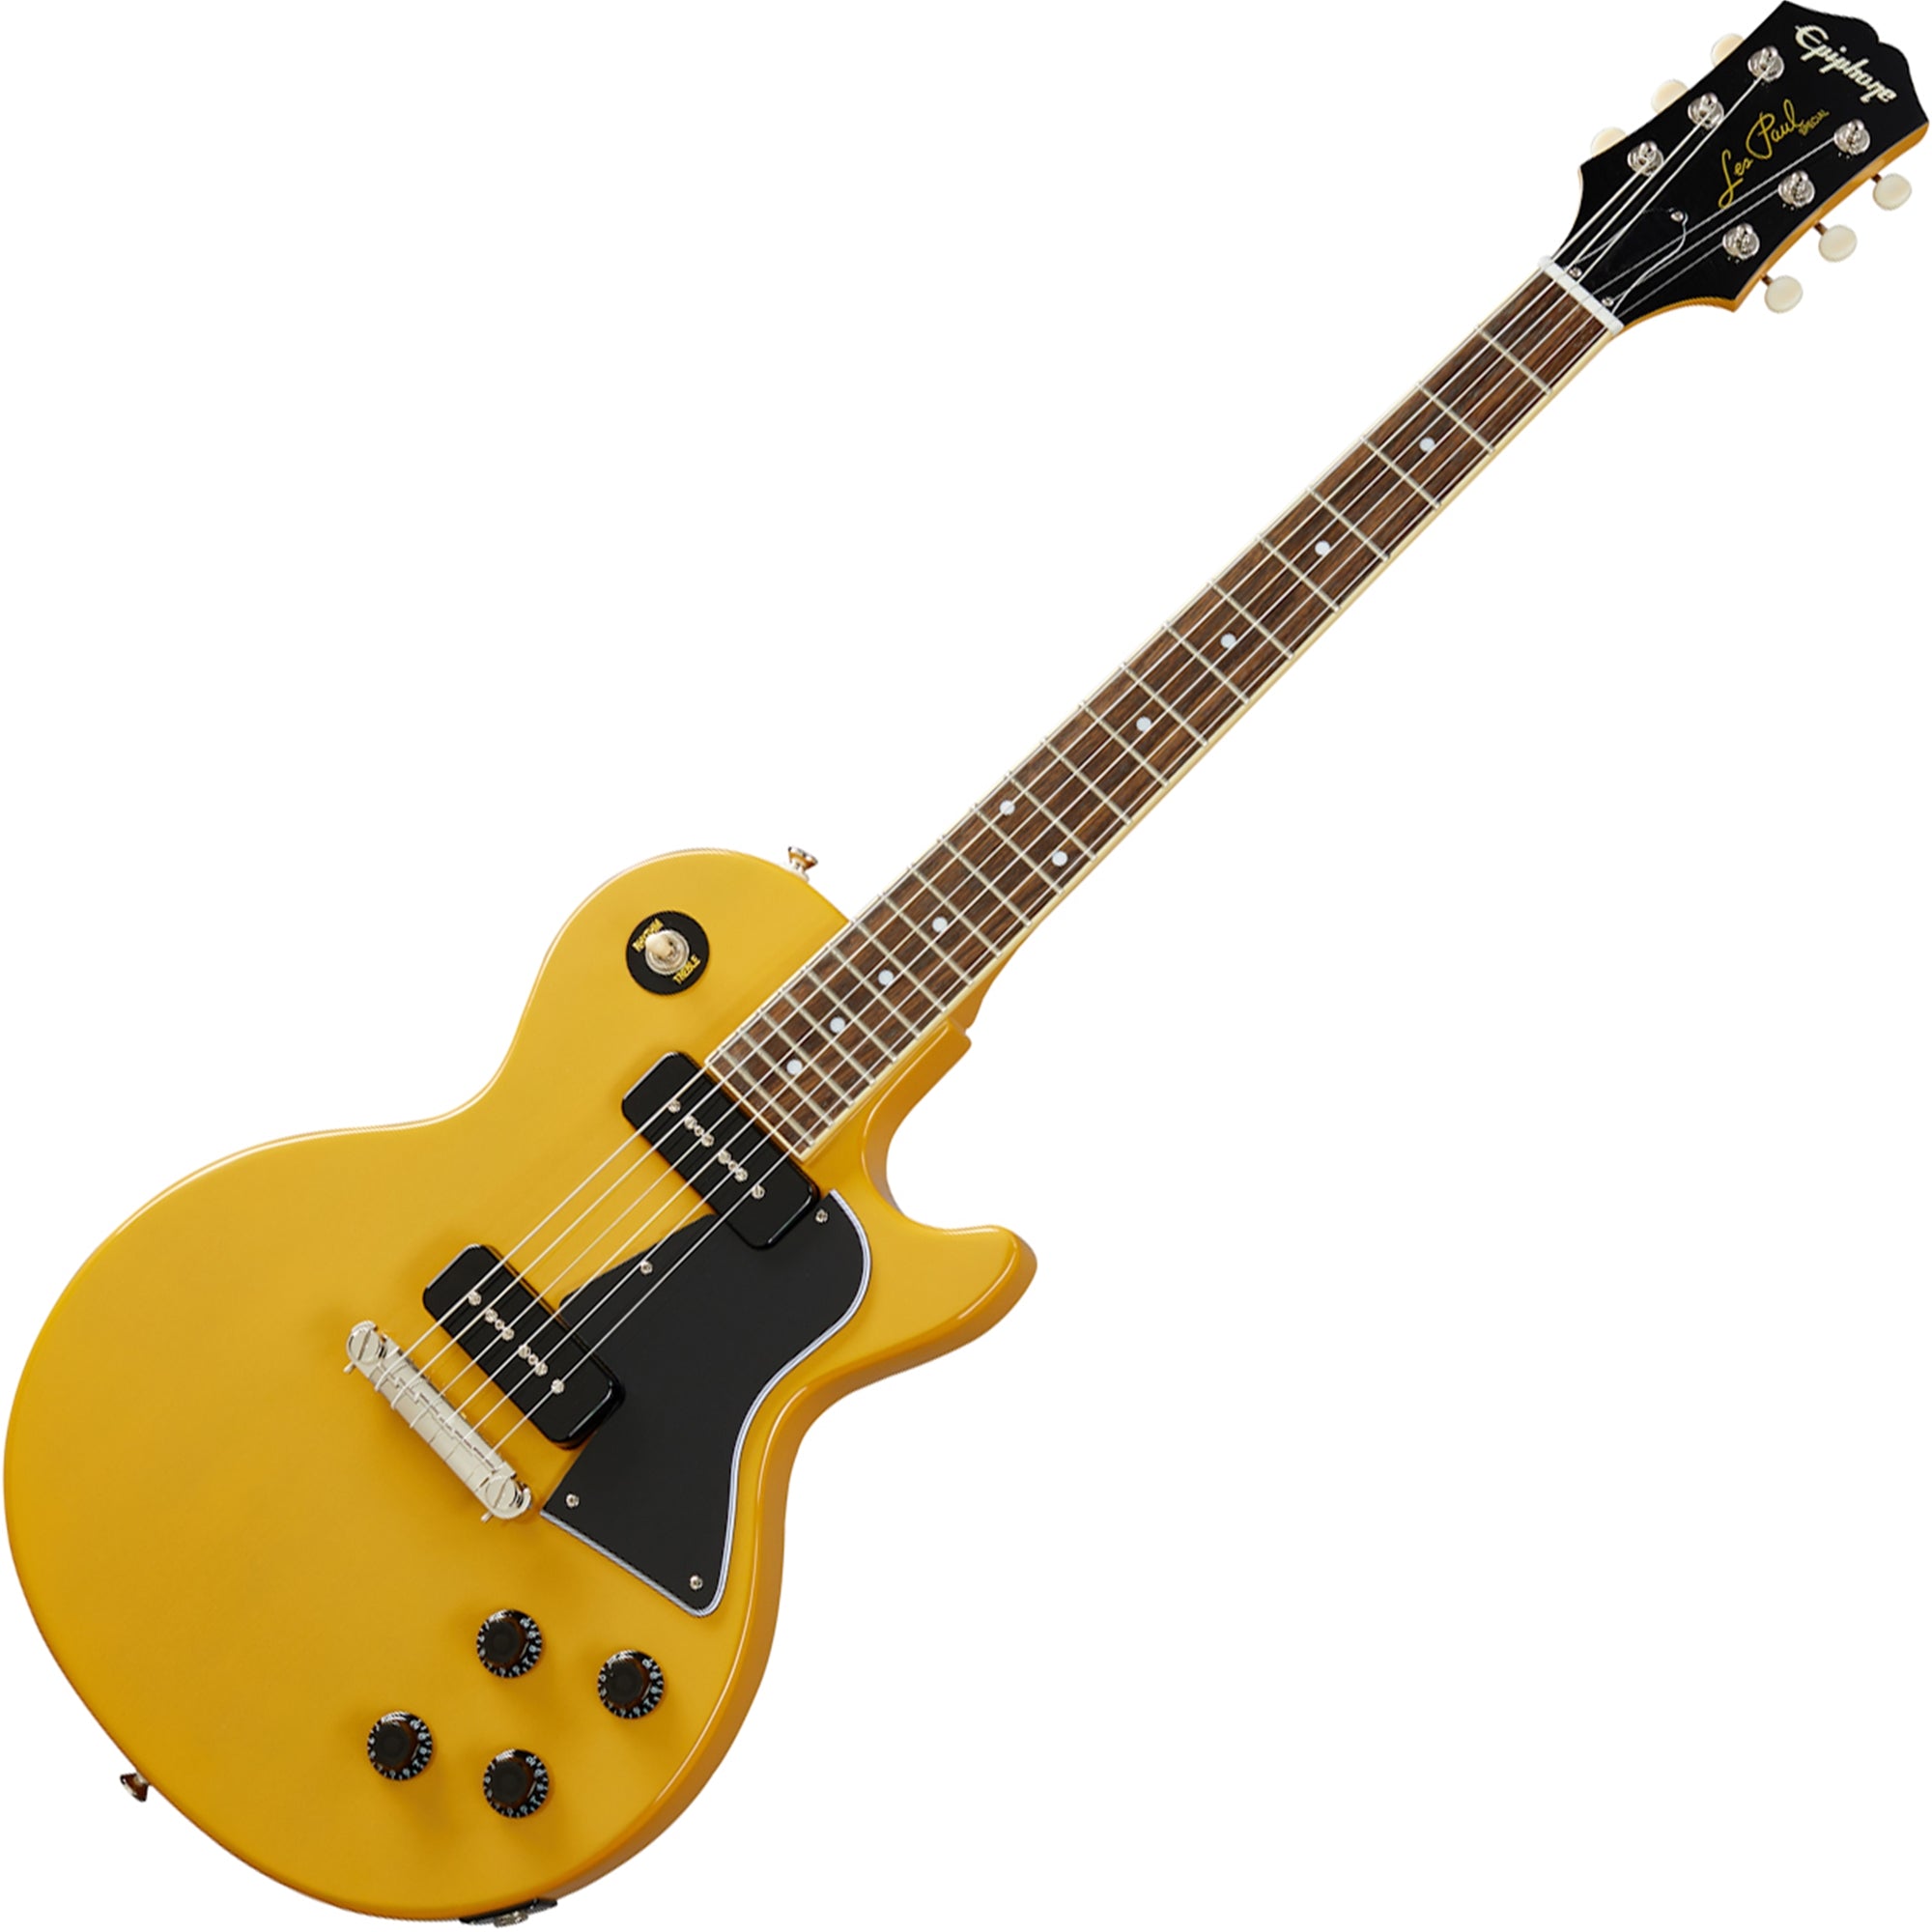 Epiphone EILPTVNH1 Les Paul Special Electric Guitar (TV Yellow)